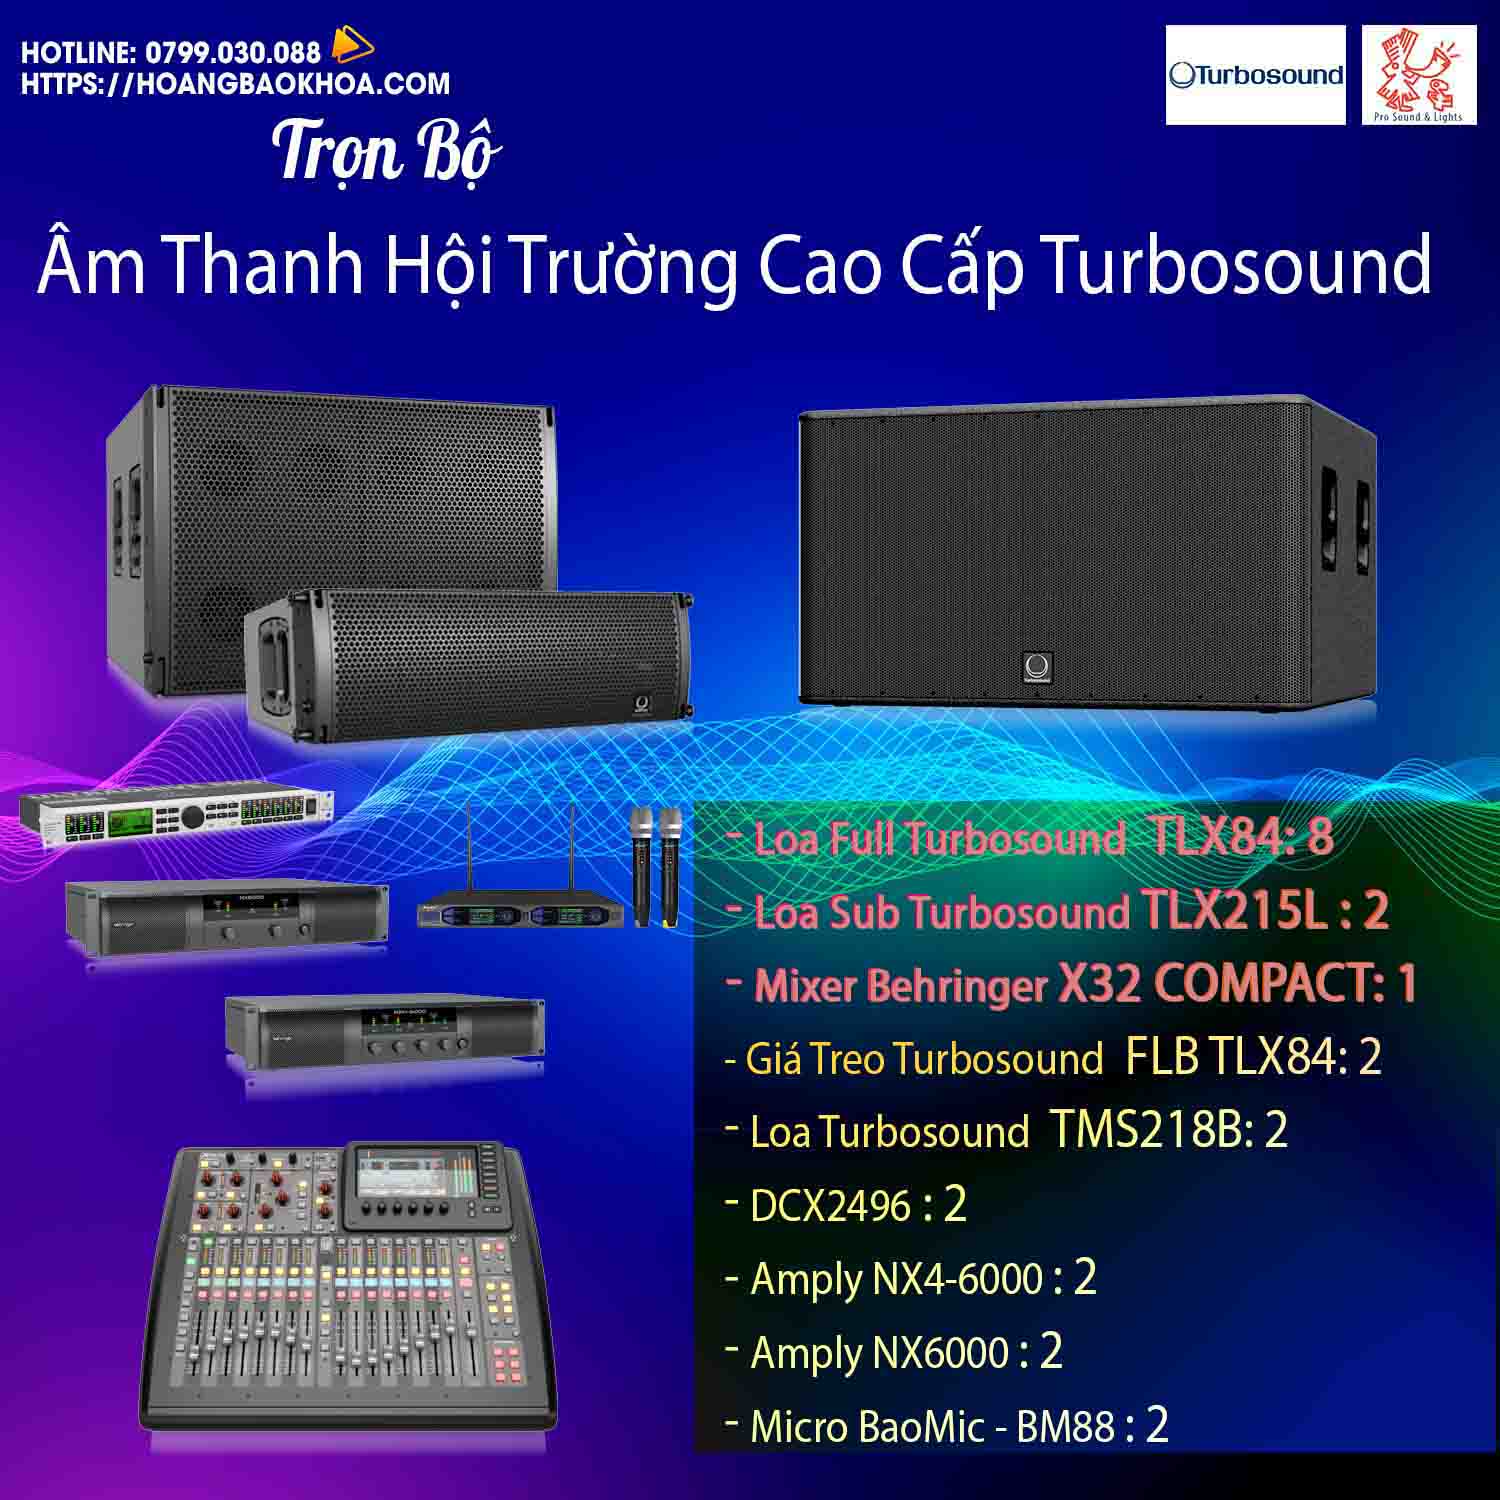 SSTURS3 Pro Audio Turbosound Set 2